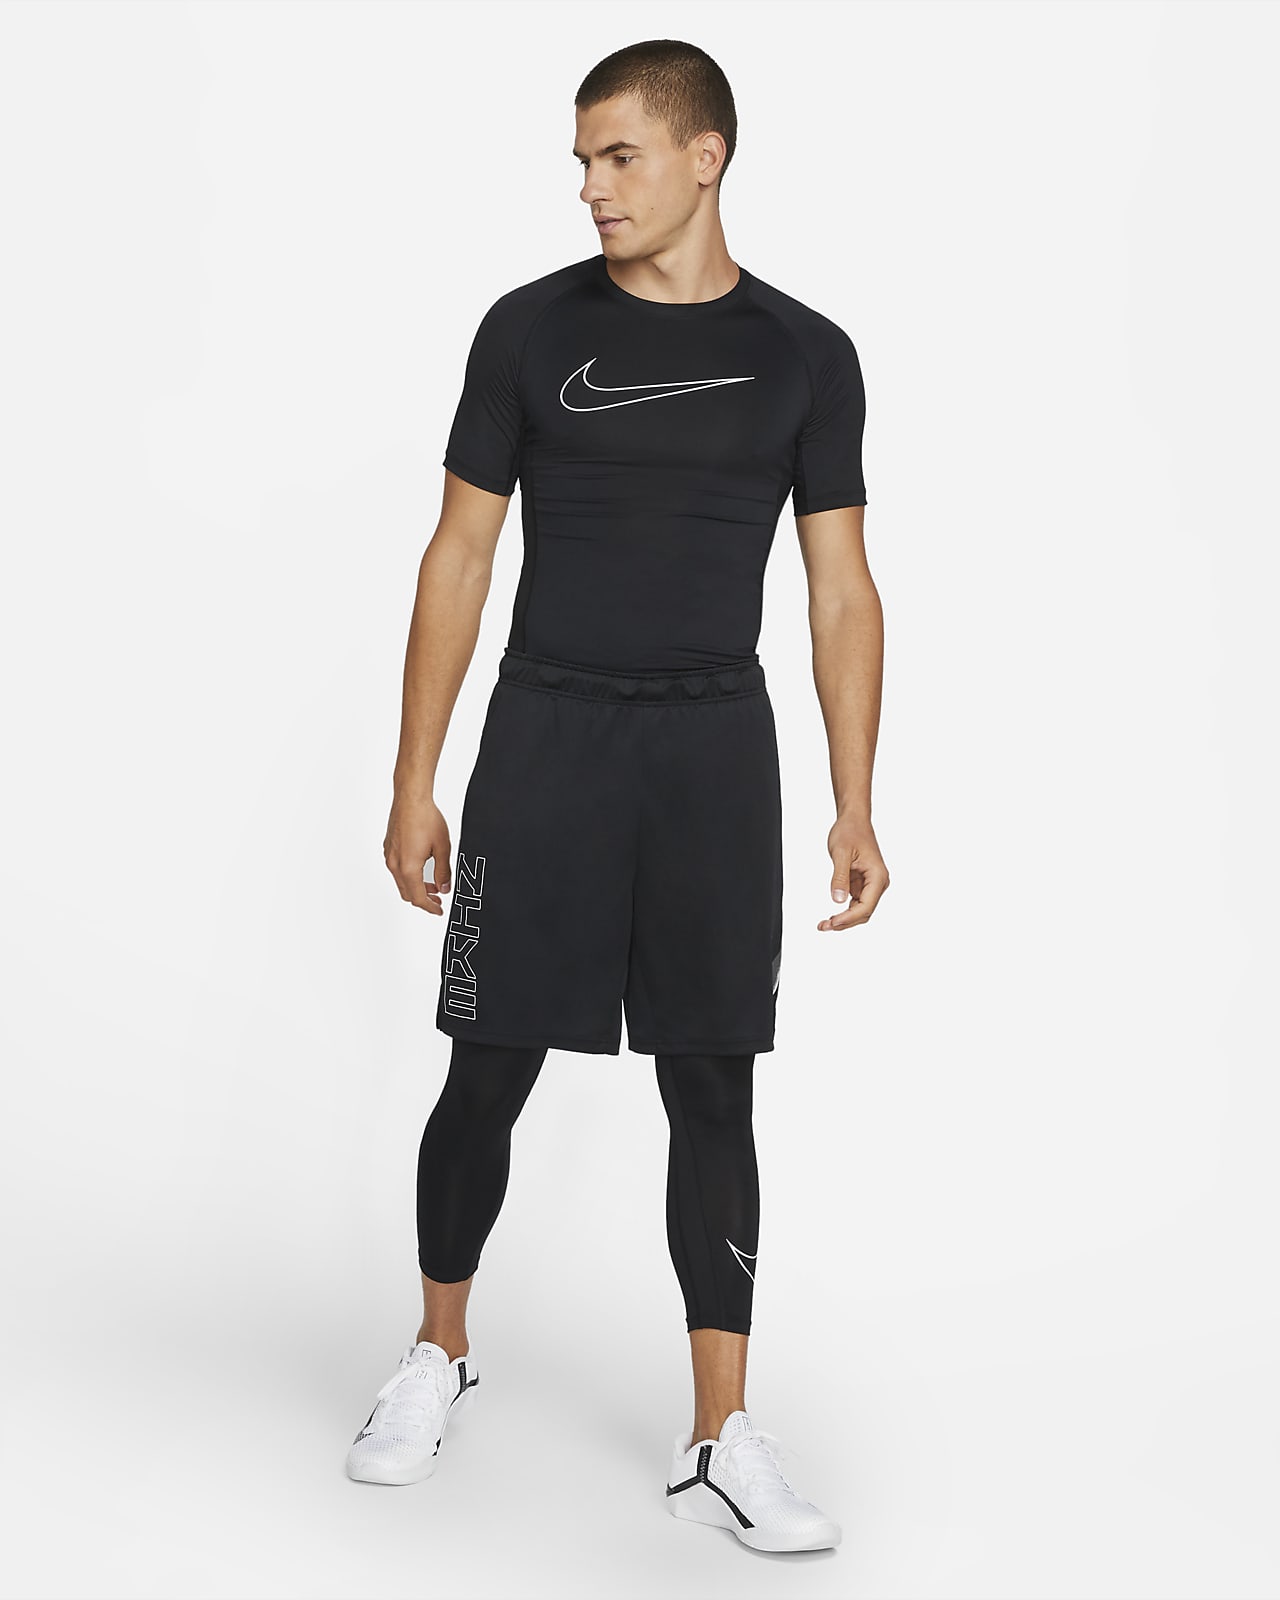 Nike Dri-FIT Tight-Fit Short-Sleeve Top. Nike